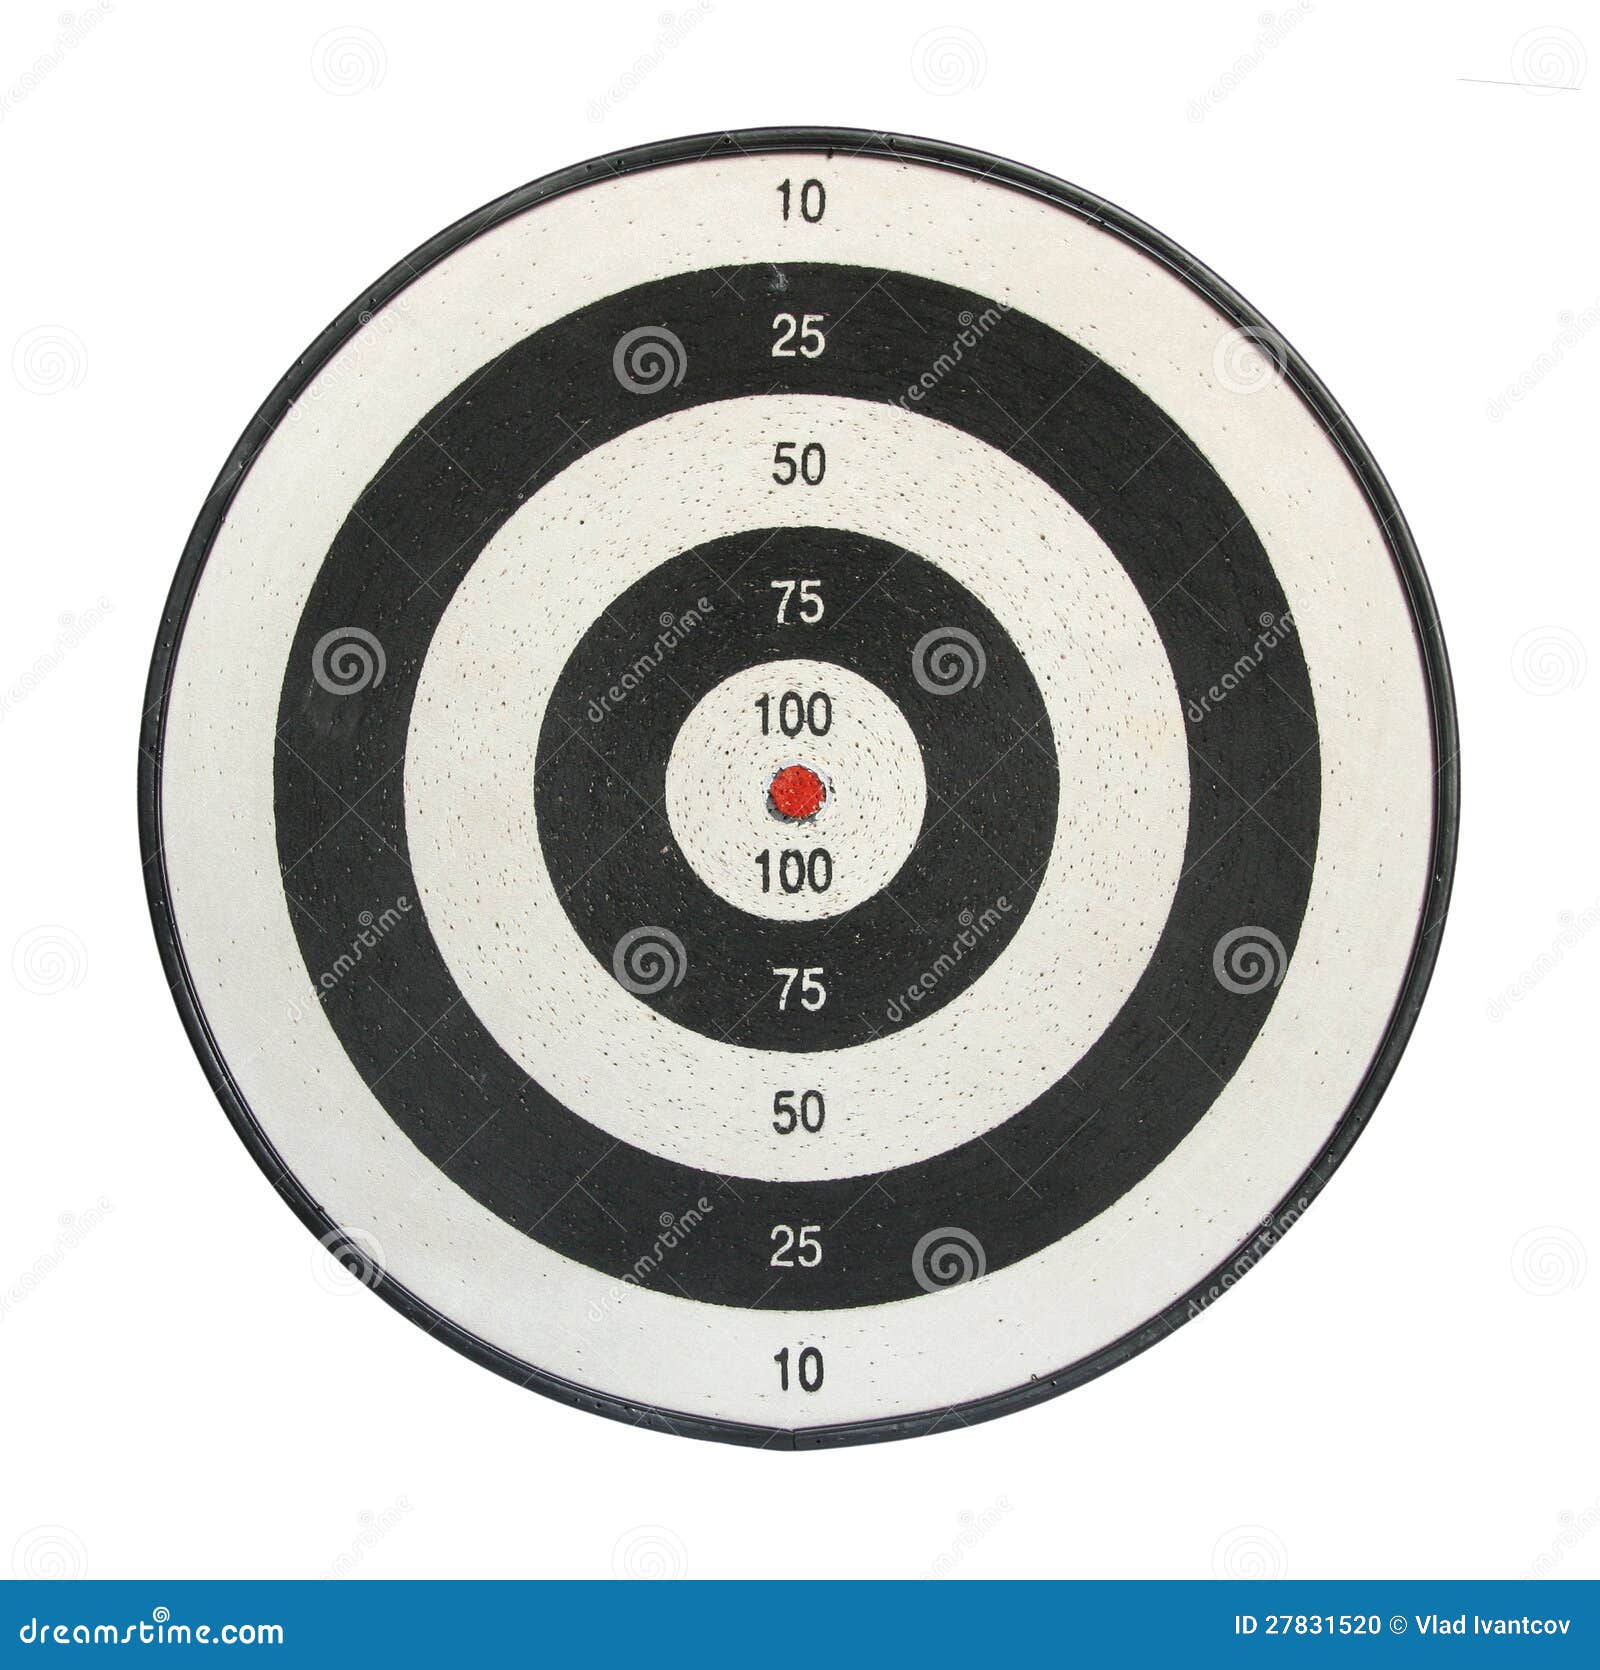 target-darts-27831520.jpg